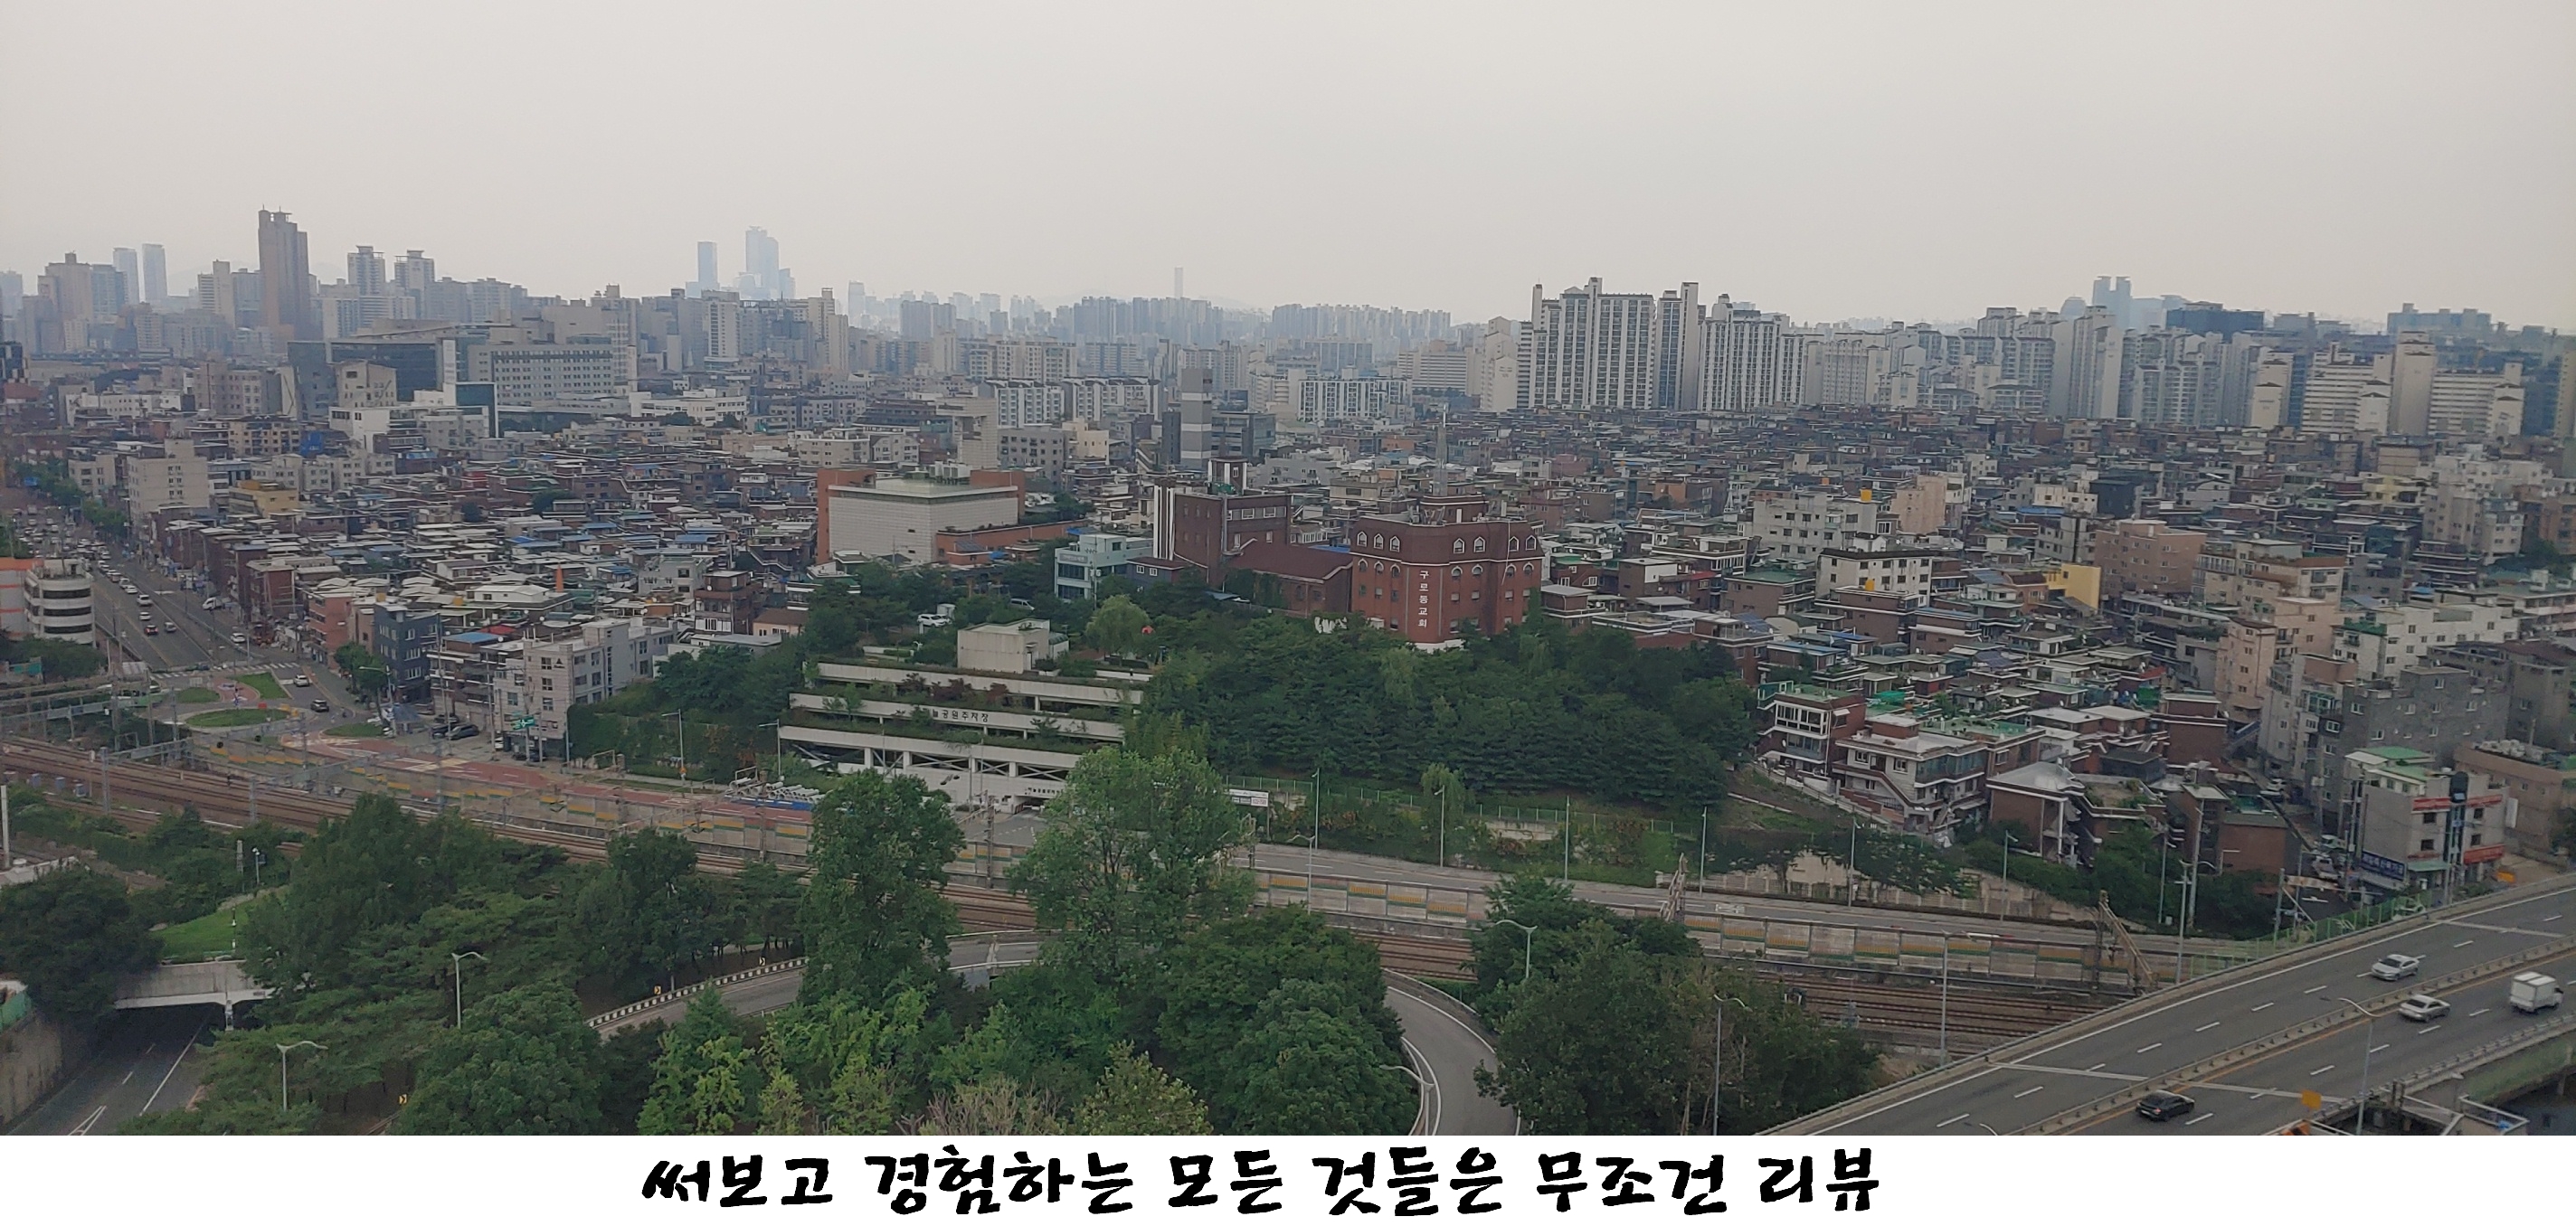 220704&#44; Seoul&#44; 사진&#44; 서울&#44; 풍경&#44; 하늘